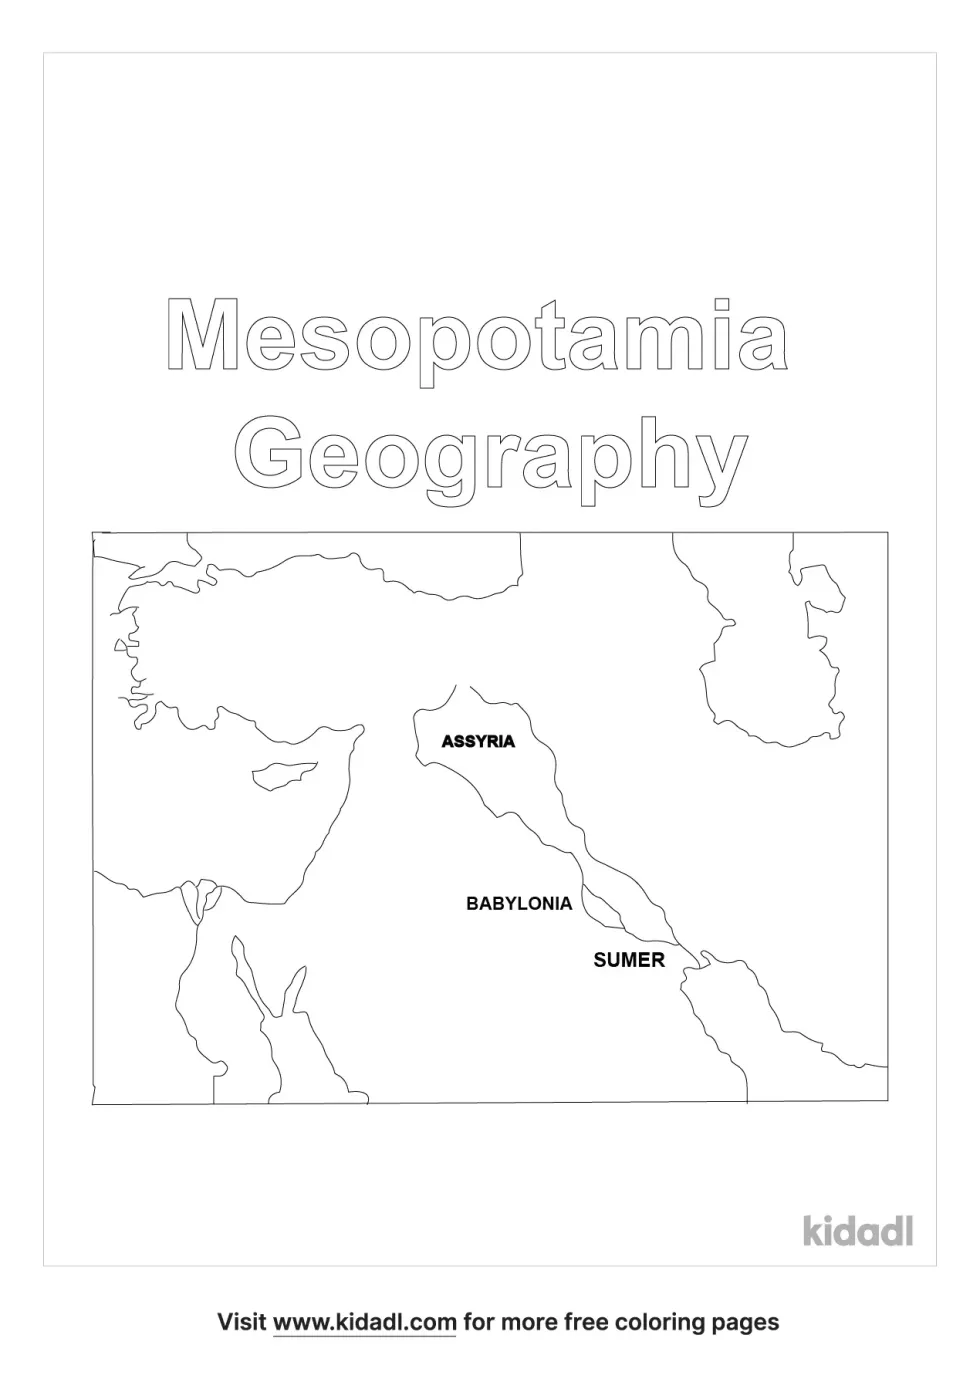 Mesopotamia Geography | Kidadl